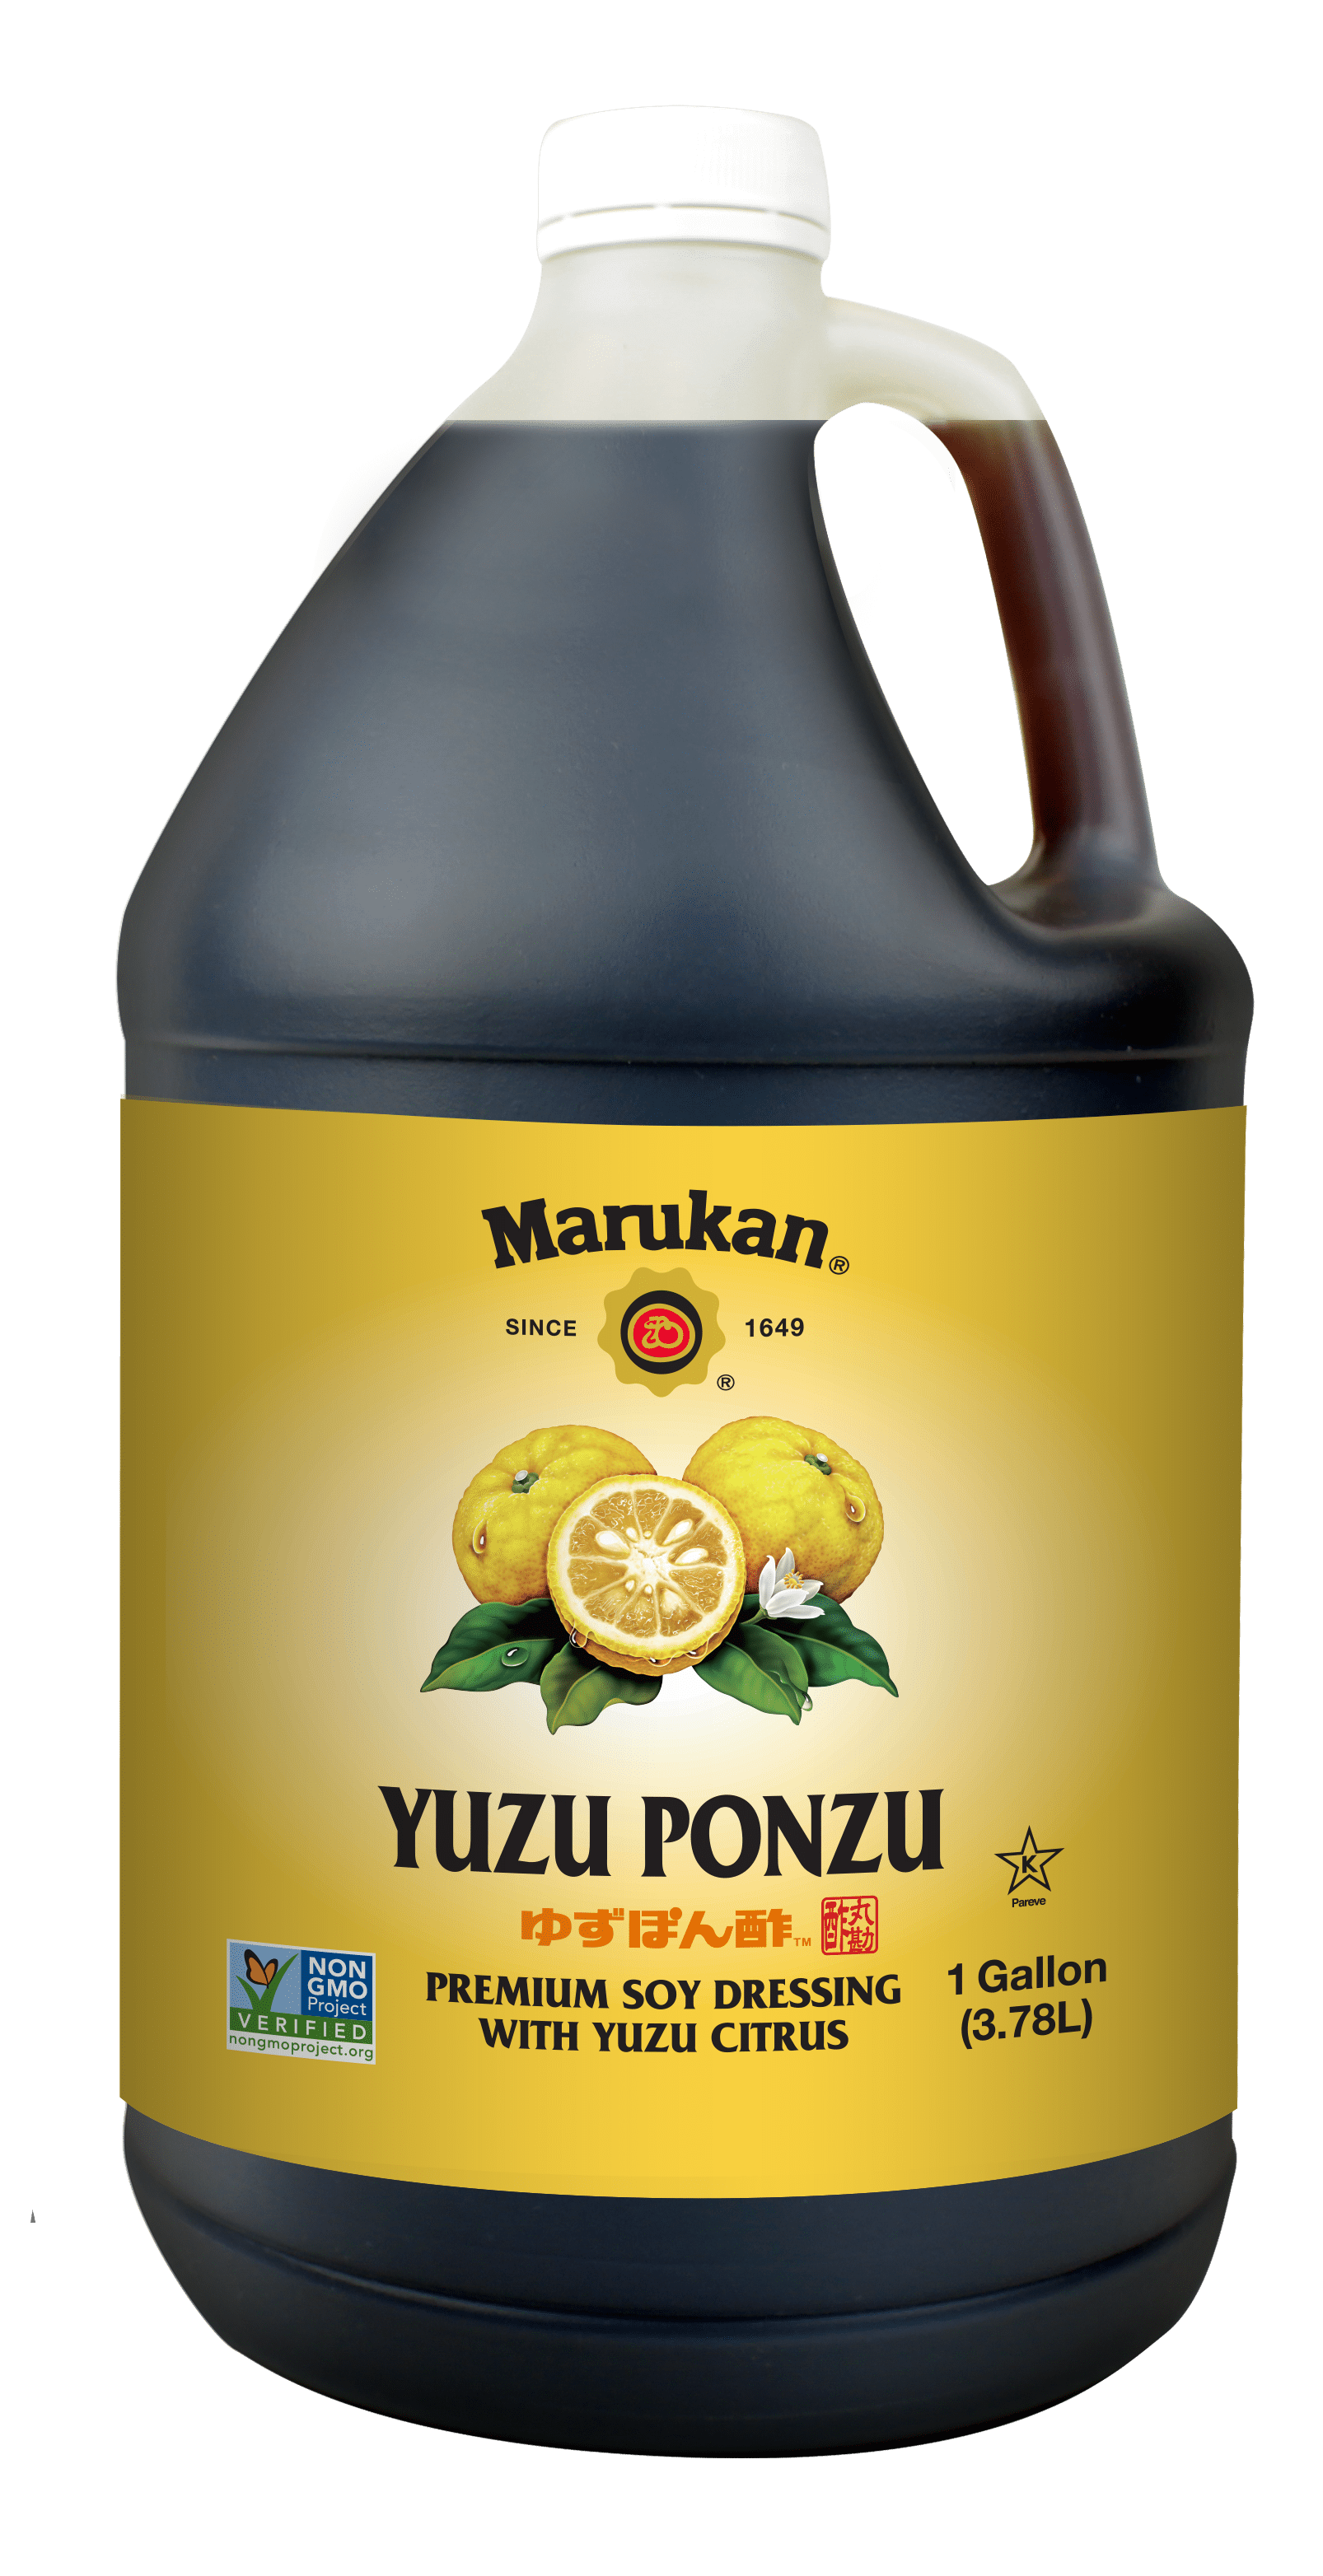 Yuzu Ponzu Premium Soy Dressing with Yuzu Citrus